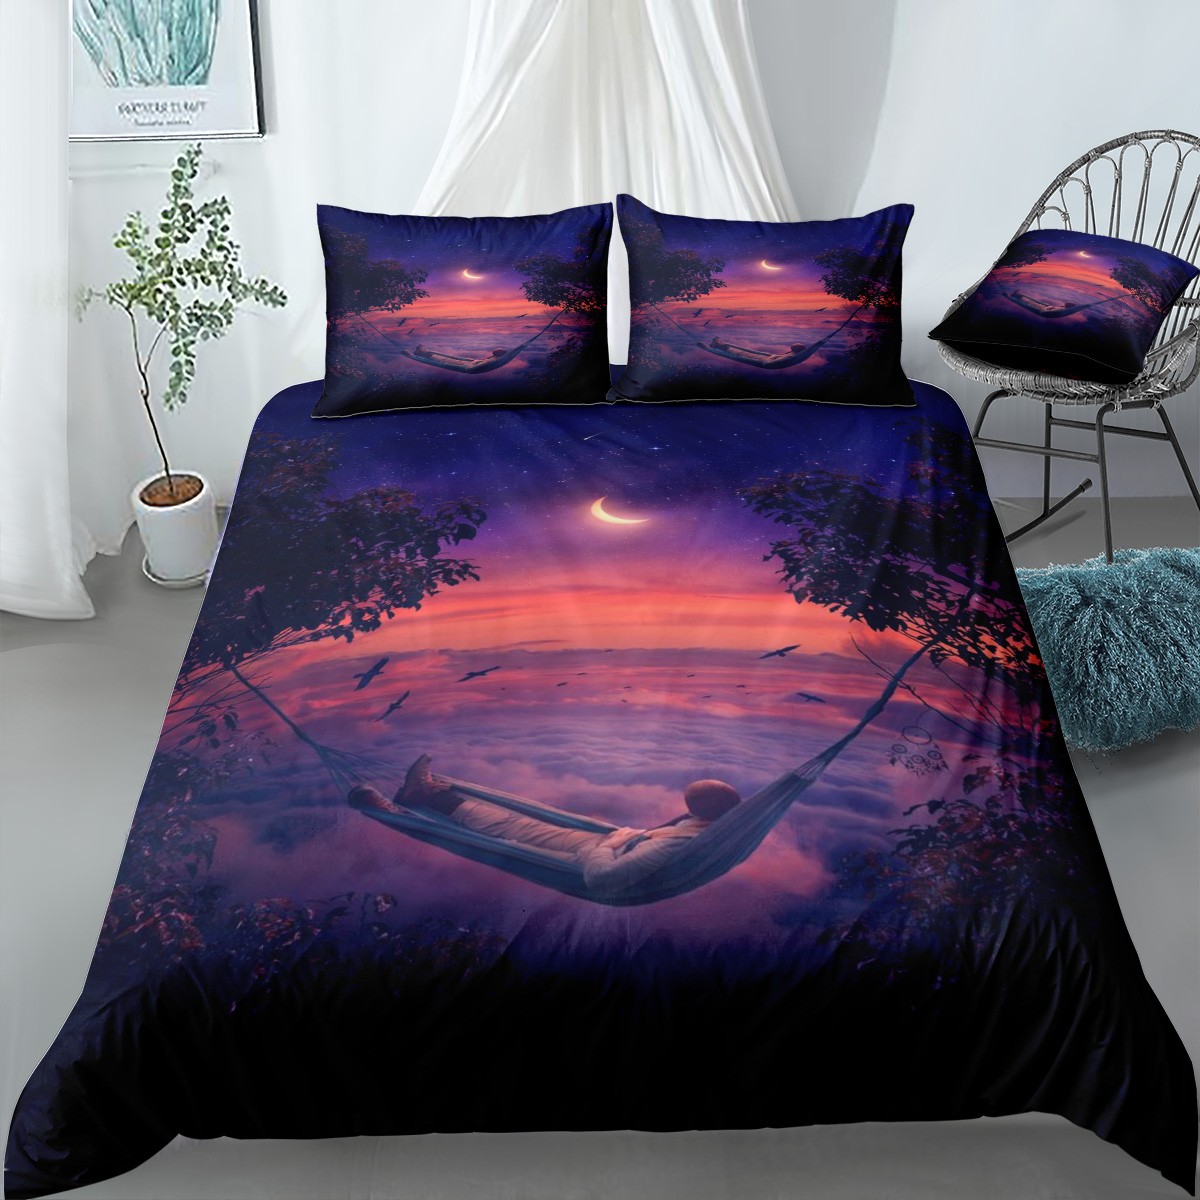 a new dawn 4pcs bedding set print 3d crystal velvetjuicy couture bedding 4516 9qqzd